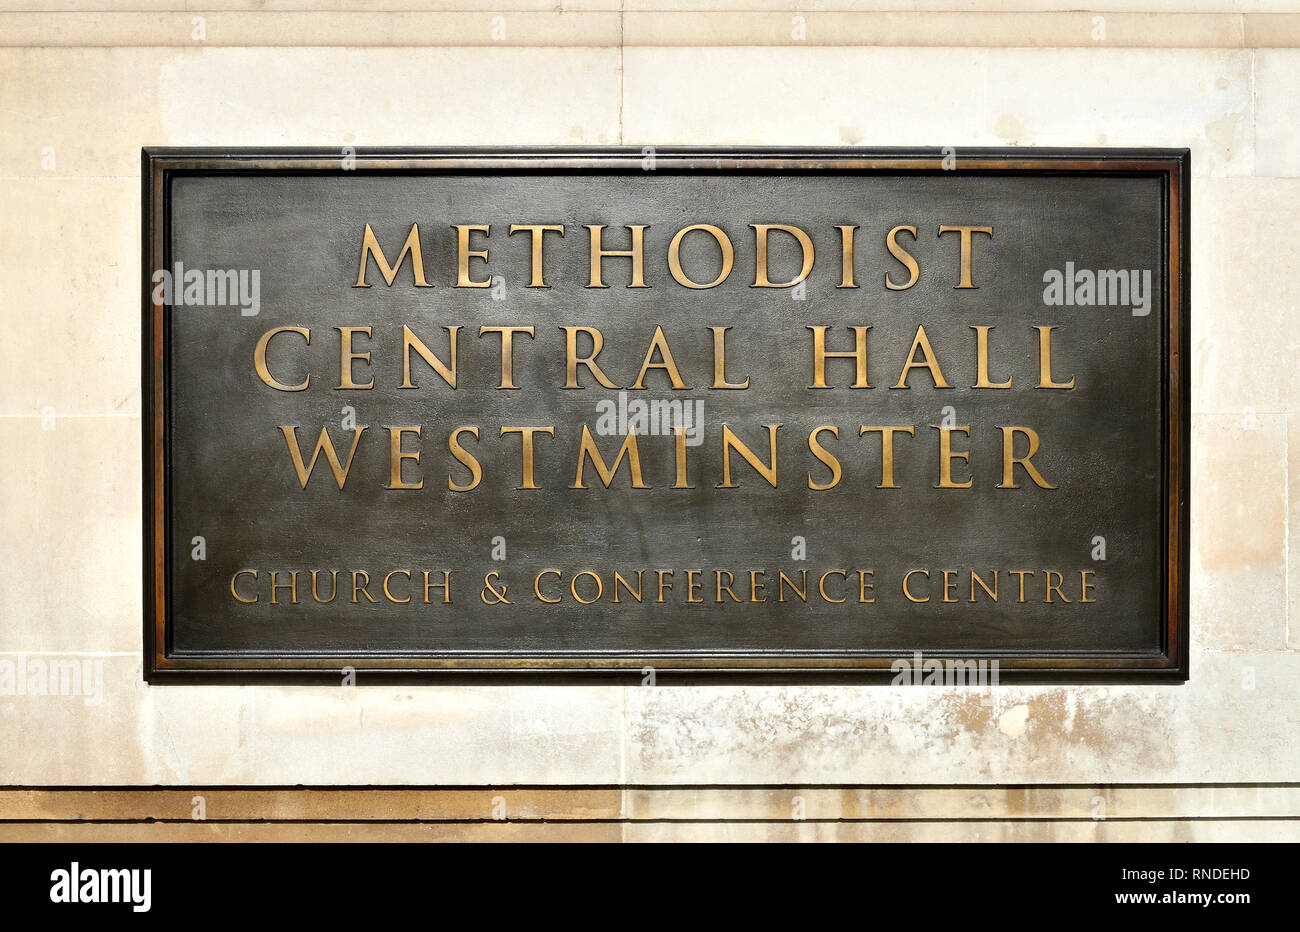 London, England, UK. Methodist Central Hall, Westminster - bonze plaque outside Stock Photo